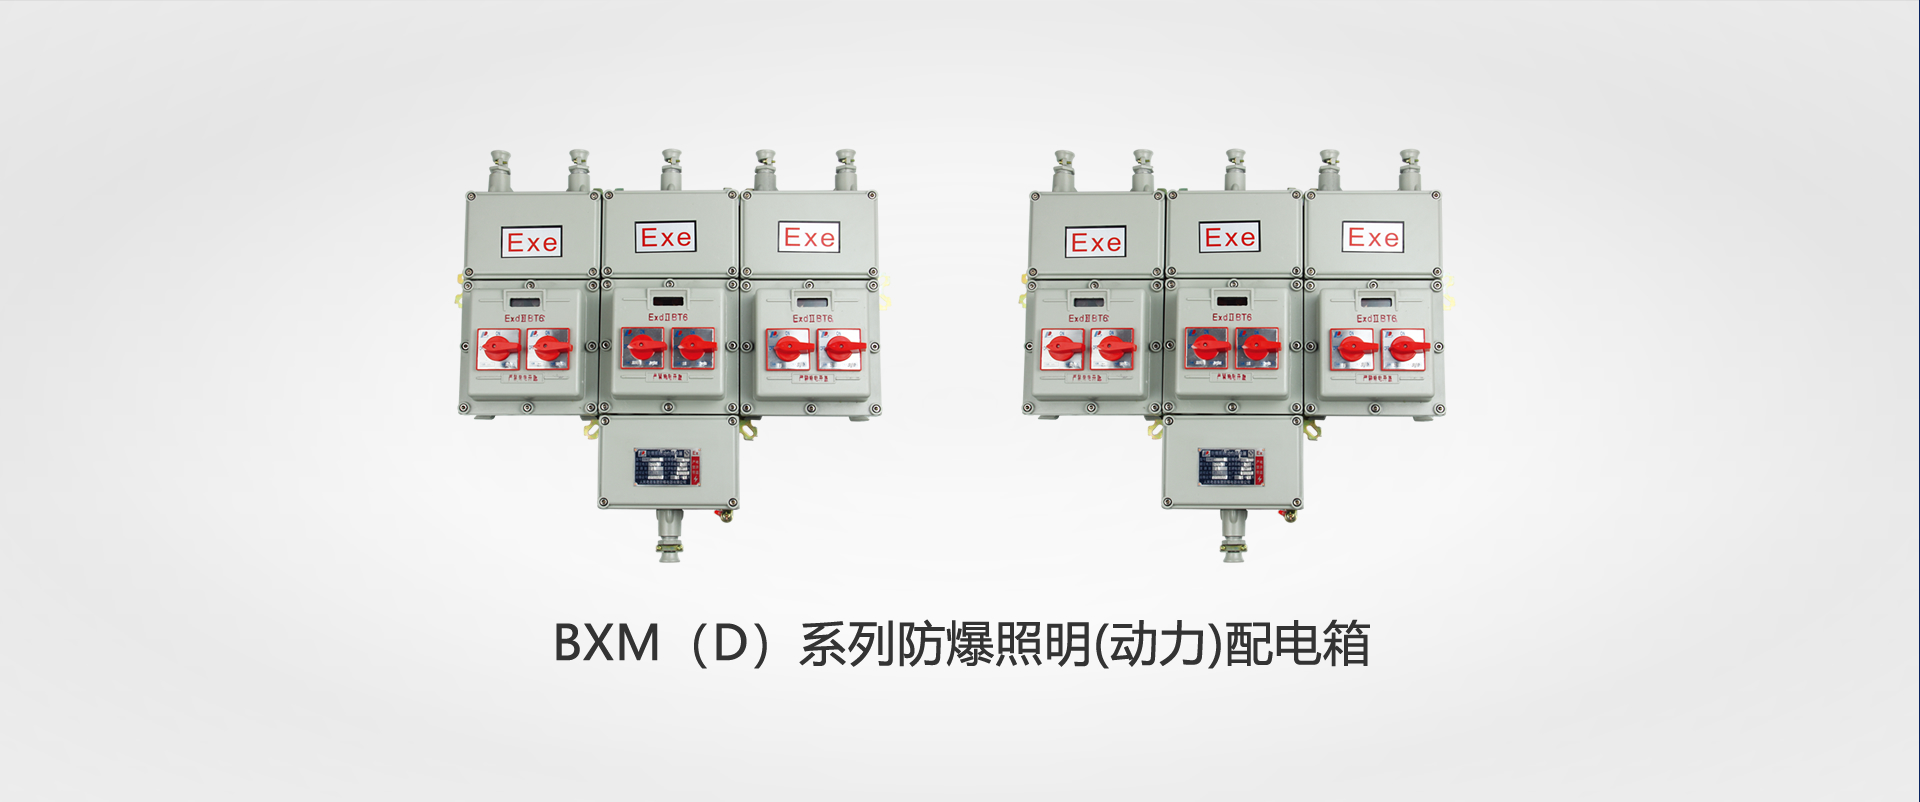 BXM（D）系(xi)列防爆照明(動力)配(pei)電箱